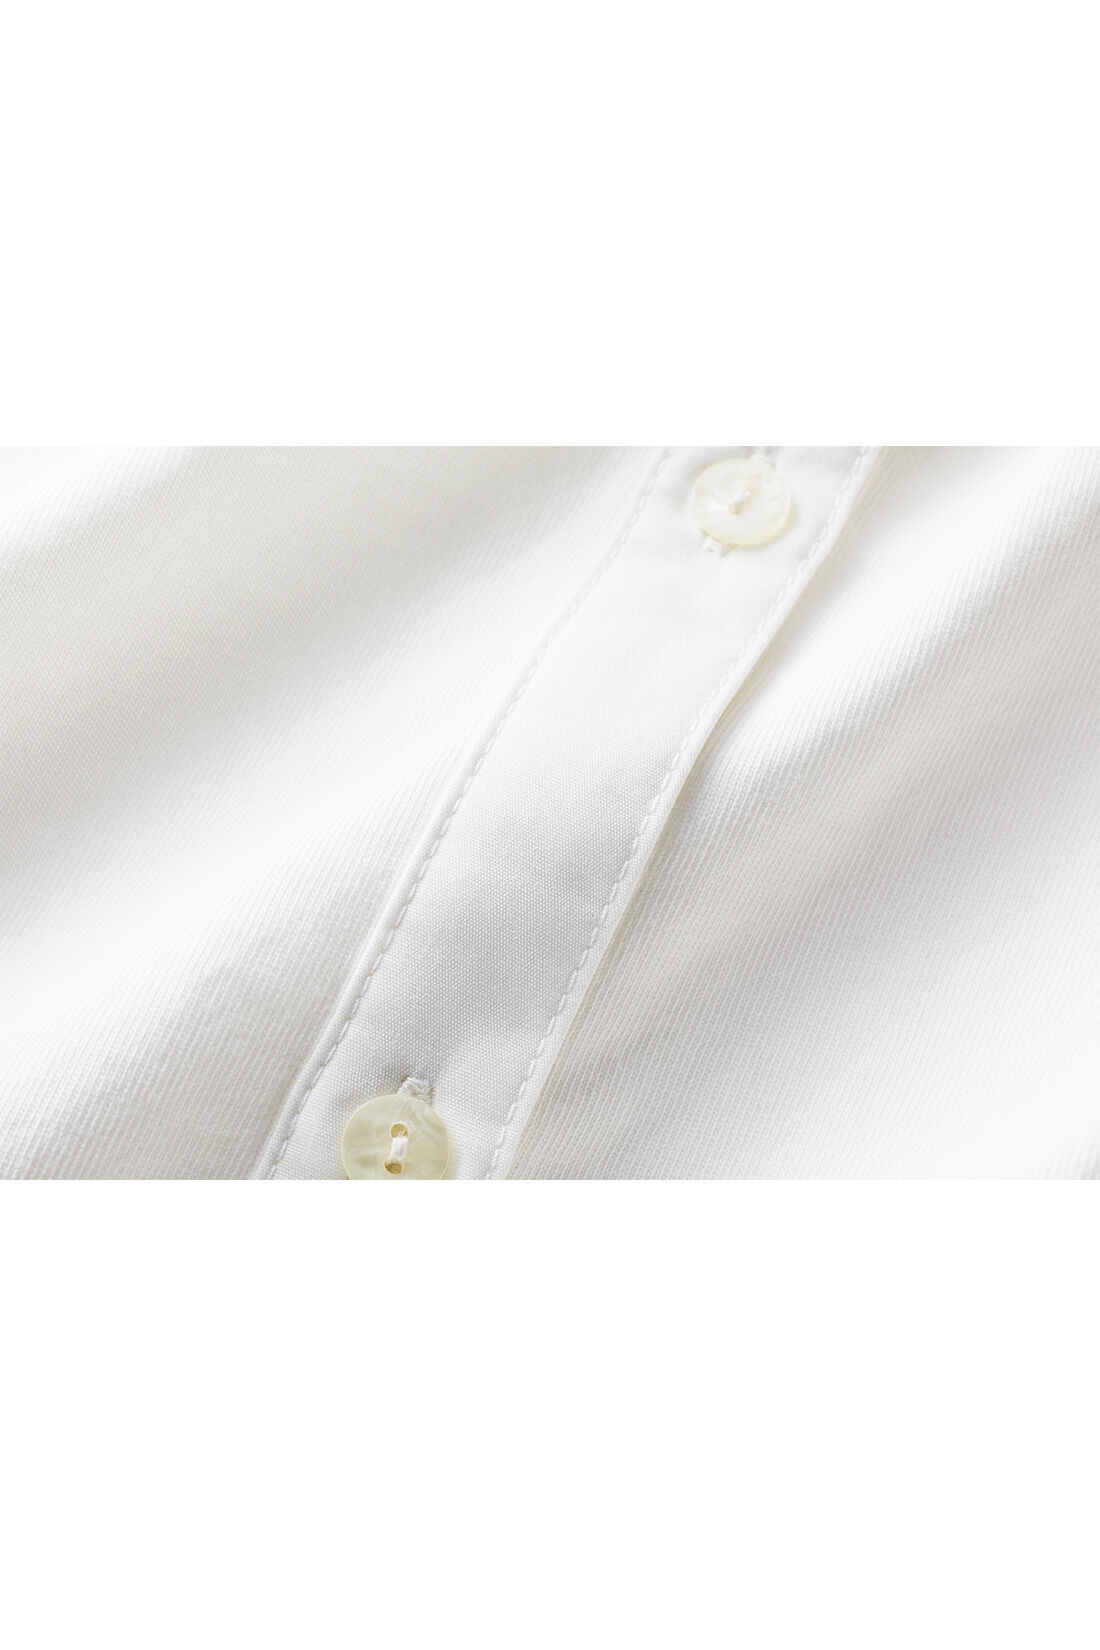 Live in  comfort|リブ イン コンフォート はまじとコラボ シャツ見えノースリーブトップス〈ホワイト〉|衿と前立ては布はく。身生地は布はく見えするカットソー。